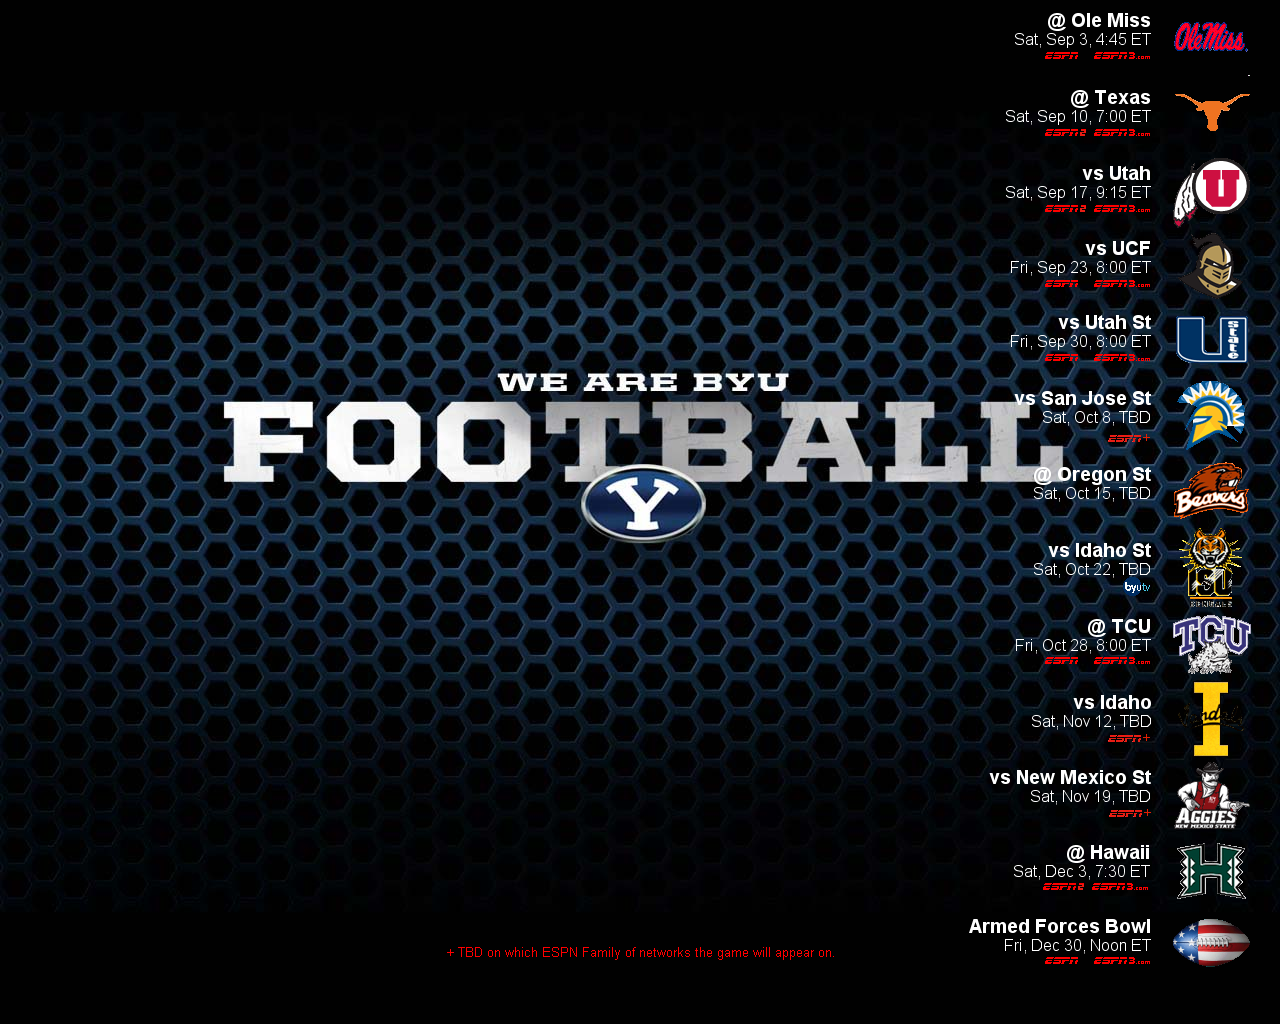 2011 BYU Football Schedule wallpaper (BYUFam1) - CougarBoard.com